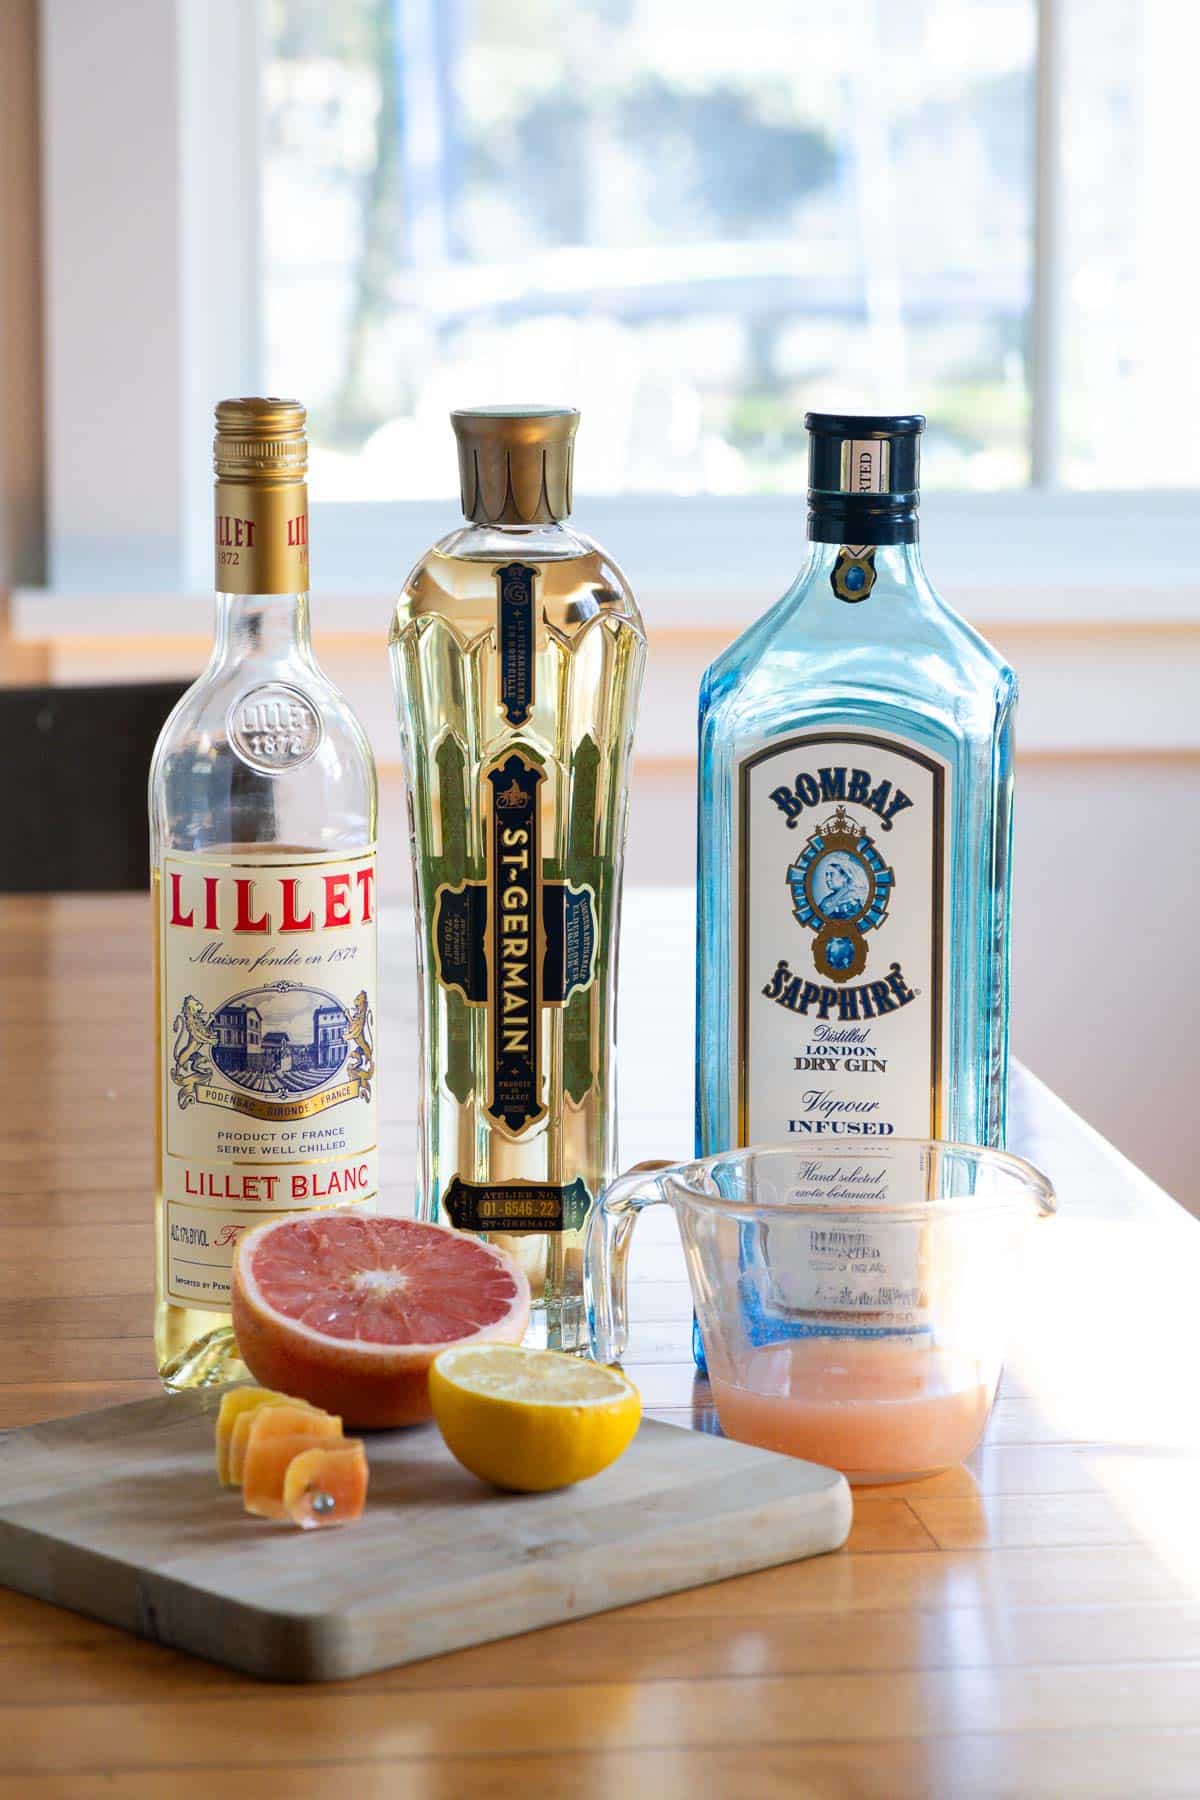 bottles of lilet blanc, st-germain, bombay sapphire gin, and grapefruit juice, a grapfruit half, and a lemon half